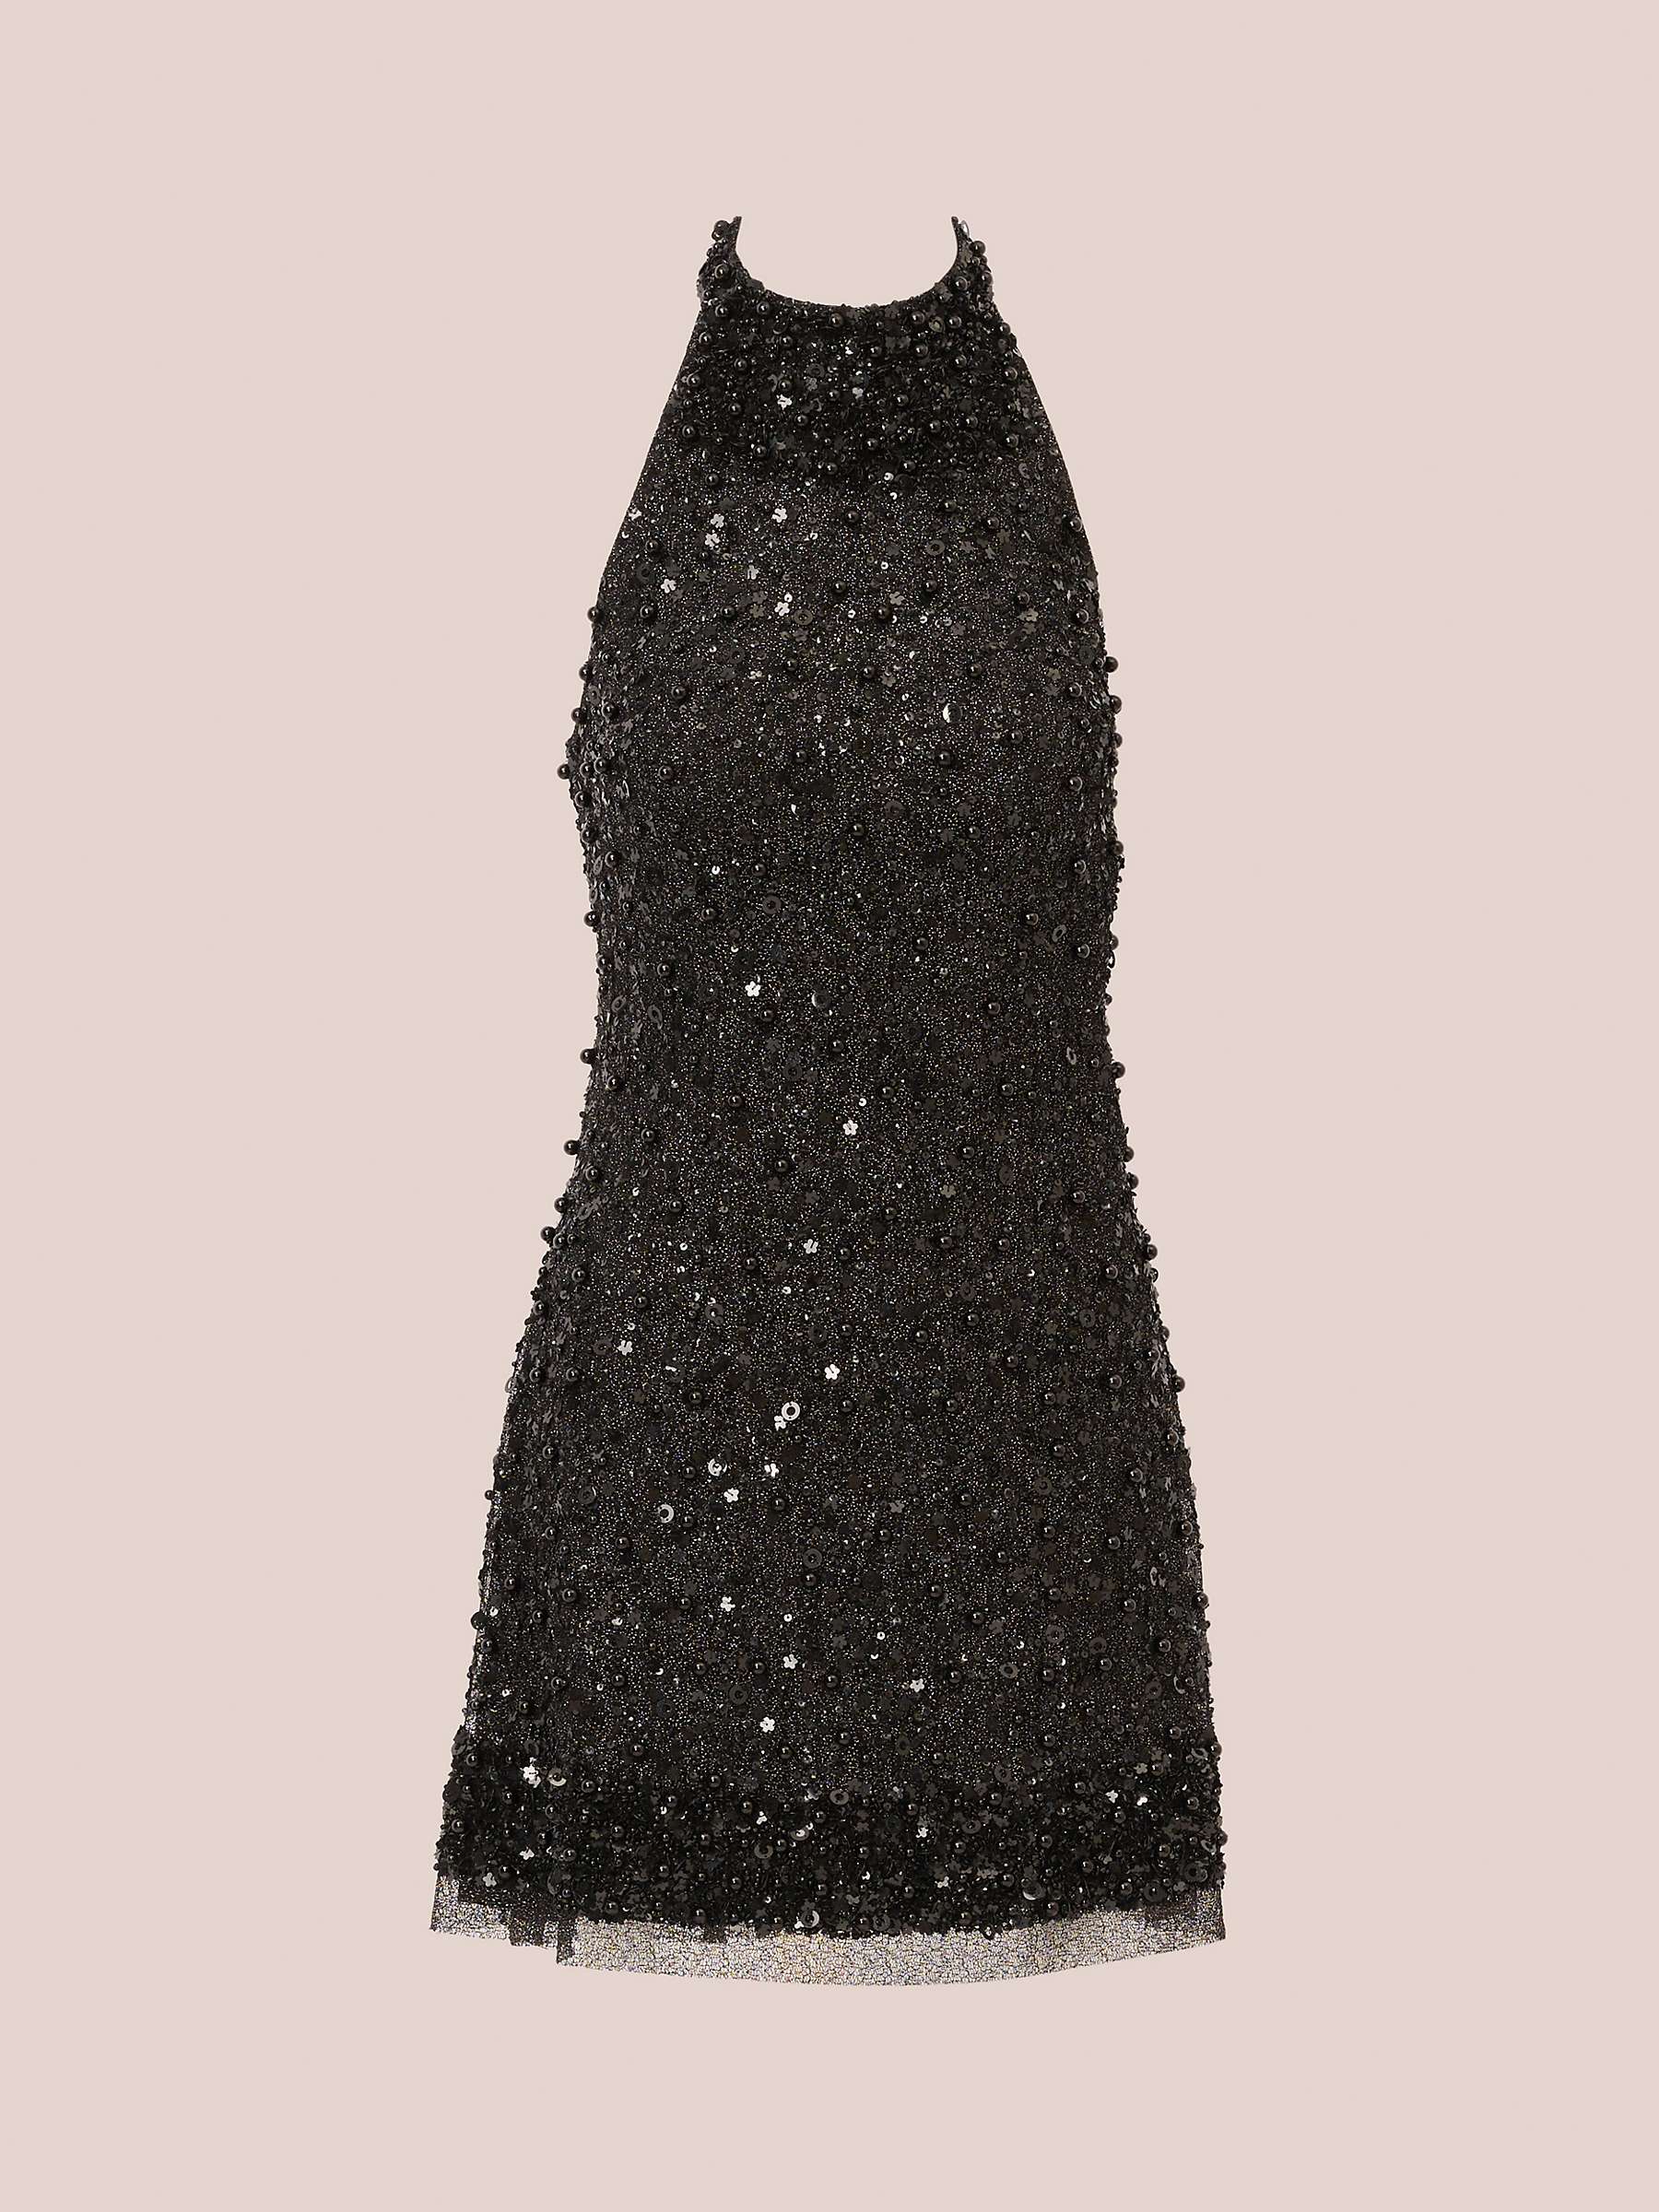 Buy Adrianna Papell Aidan Beaded Halterneck Dress, Black Online at johnlewis.com